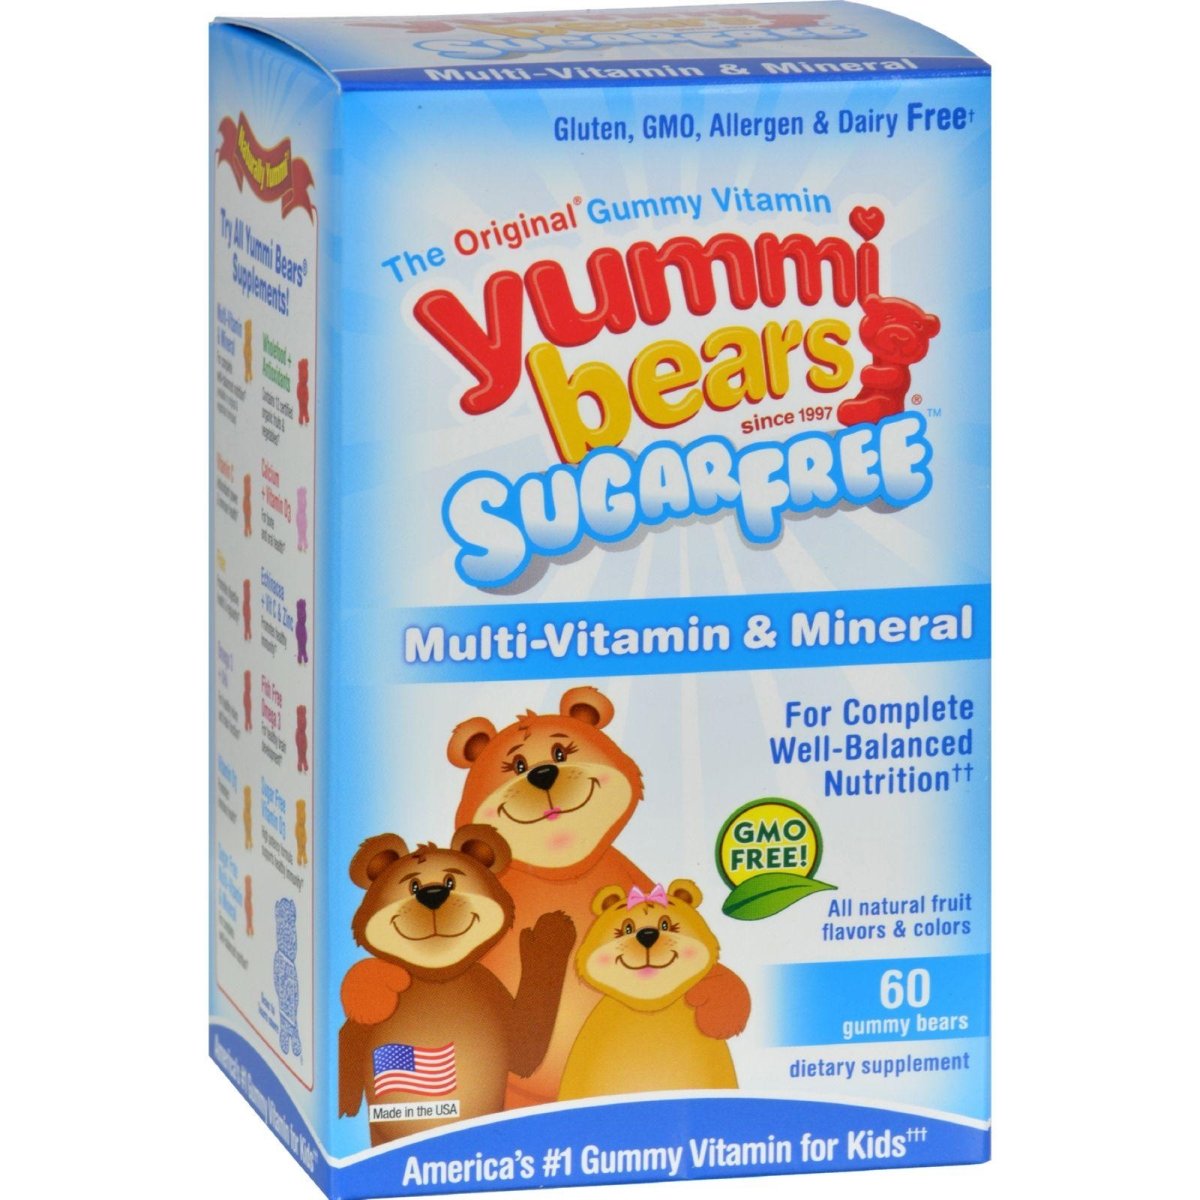 Hg0776393 Yummi Bears Multi-vitamin & Mineral Sugar Free, 60 Yummi Bears